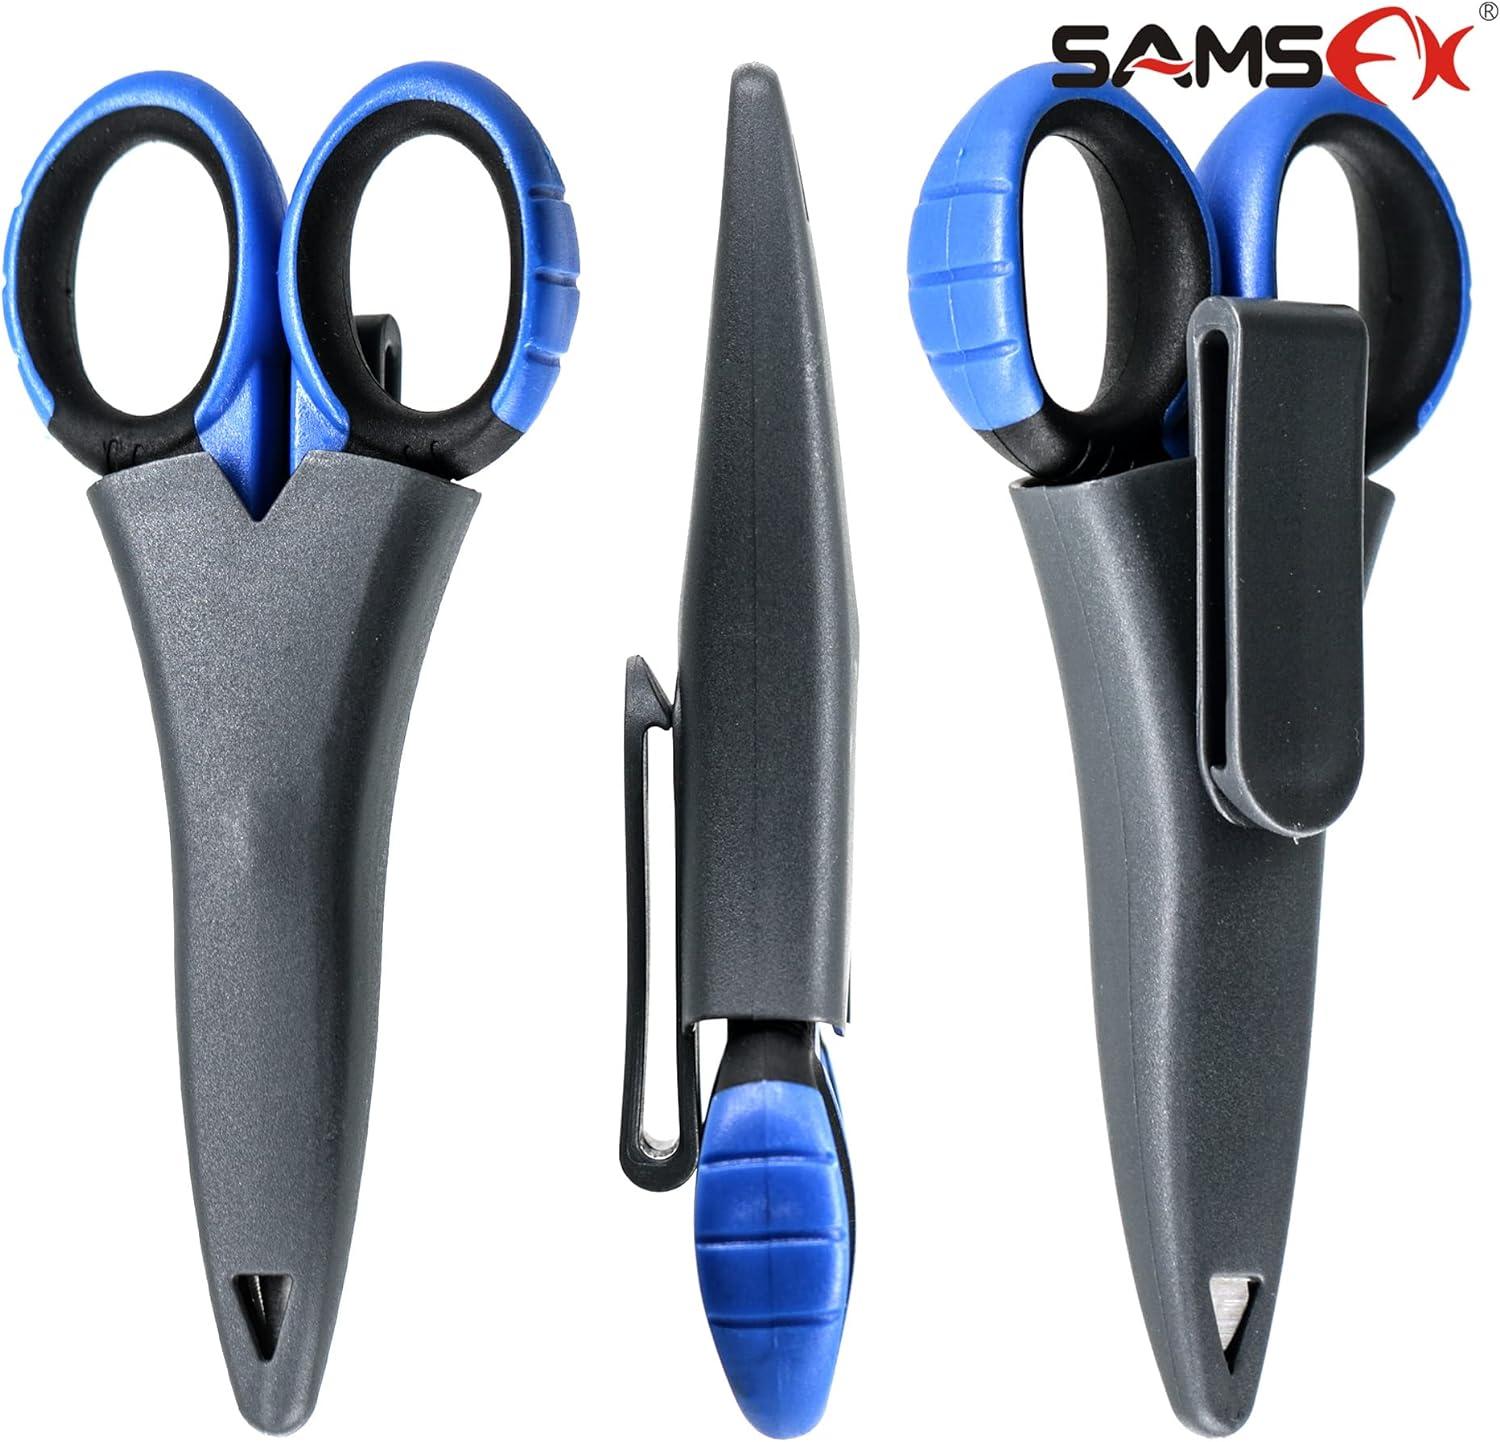 SAMSFX Fishing Heavy Duty Anti-Slip Serrated Edge Scissors